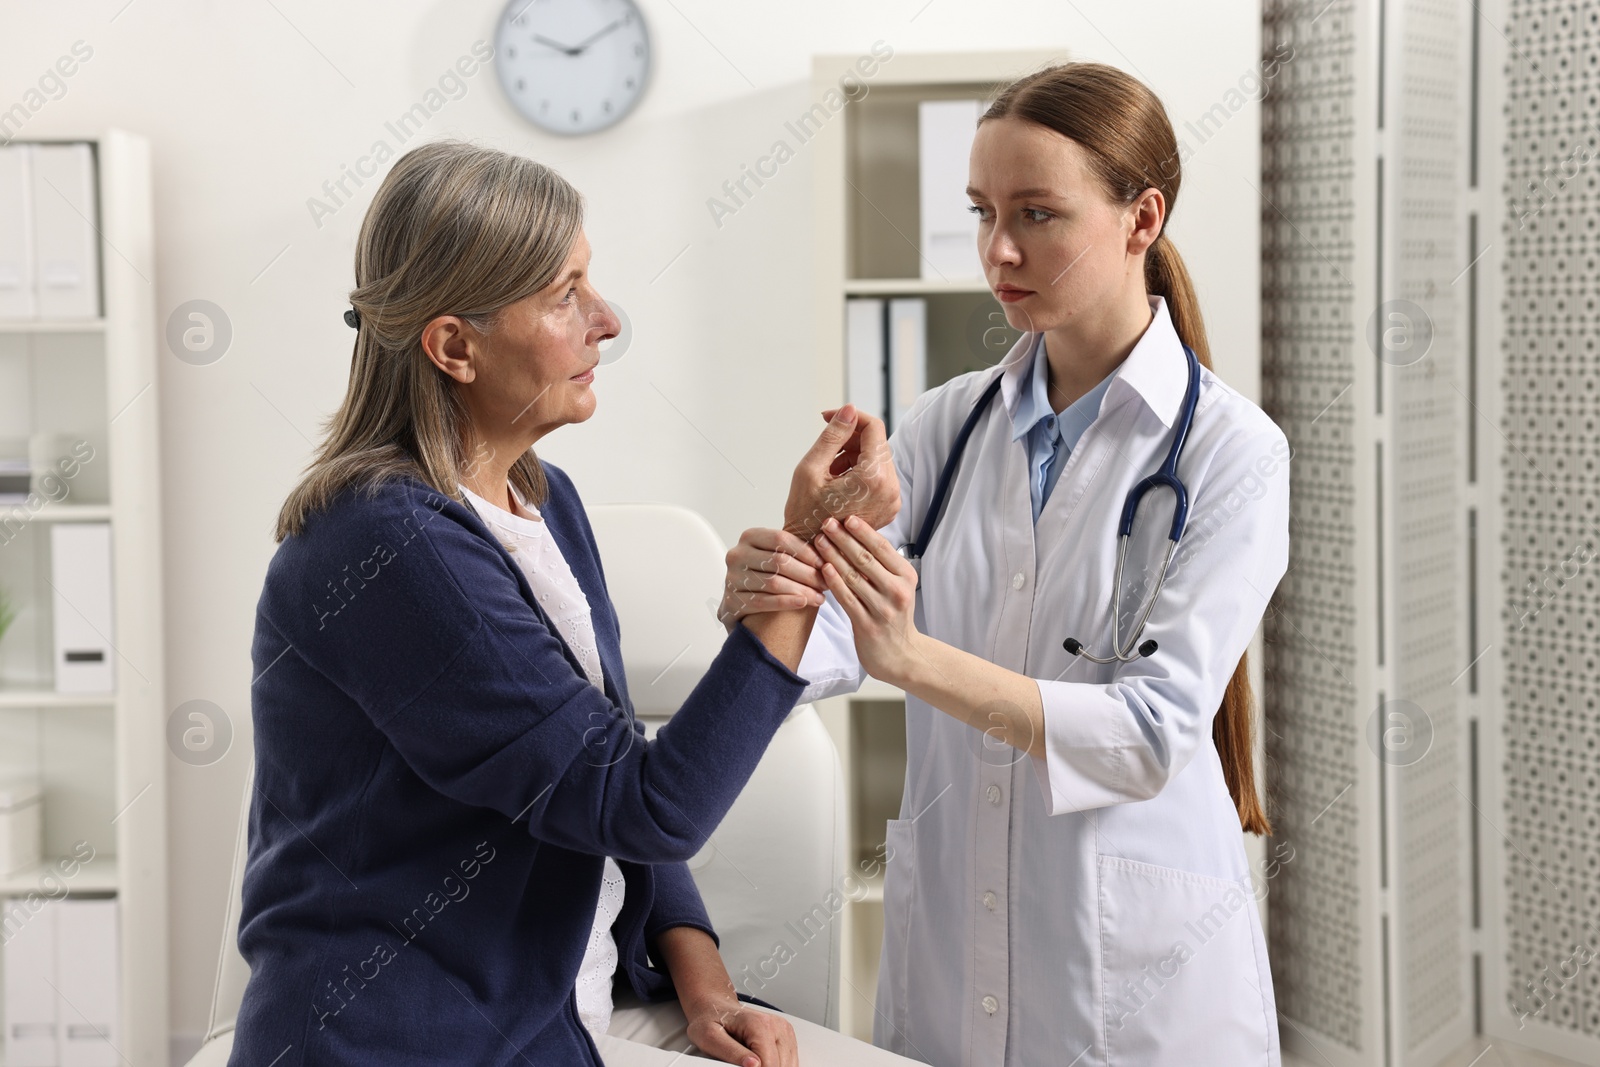 Photo of Arthritis symptoms. Doctor examining patient's hand in hospital